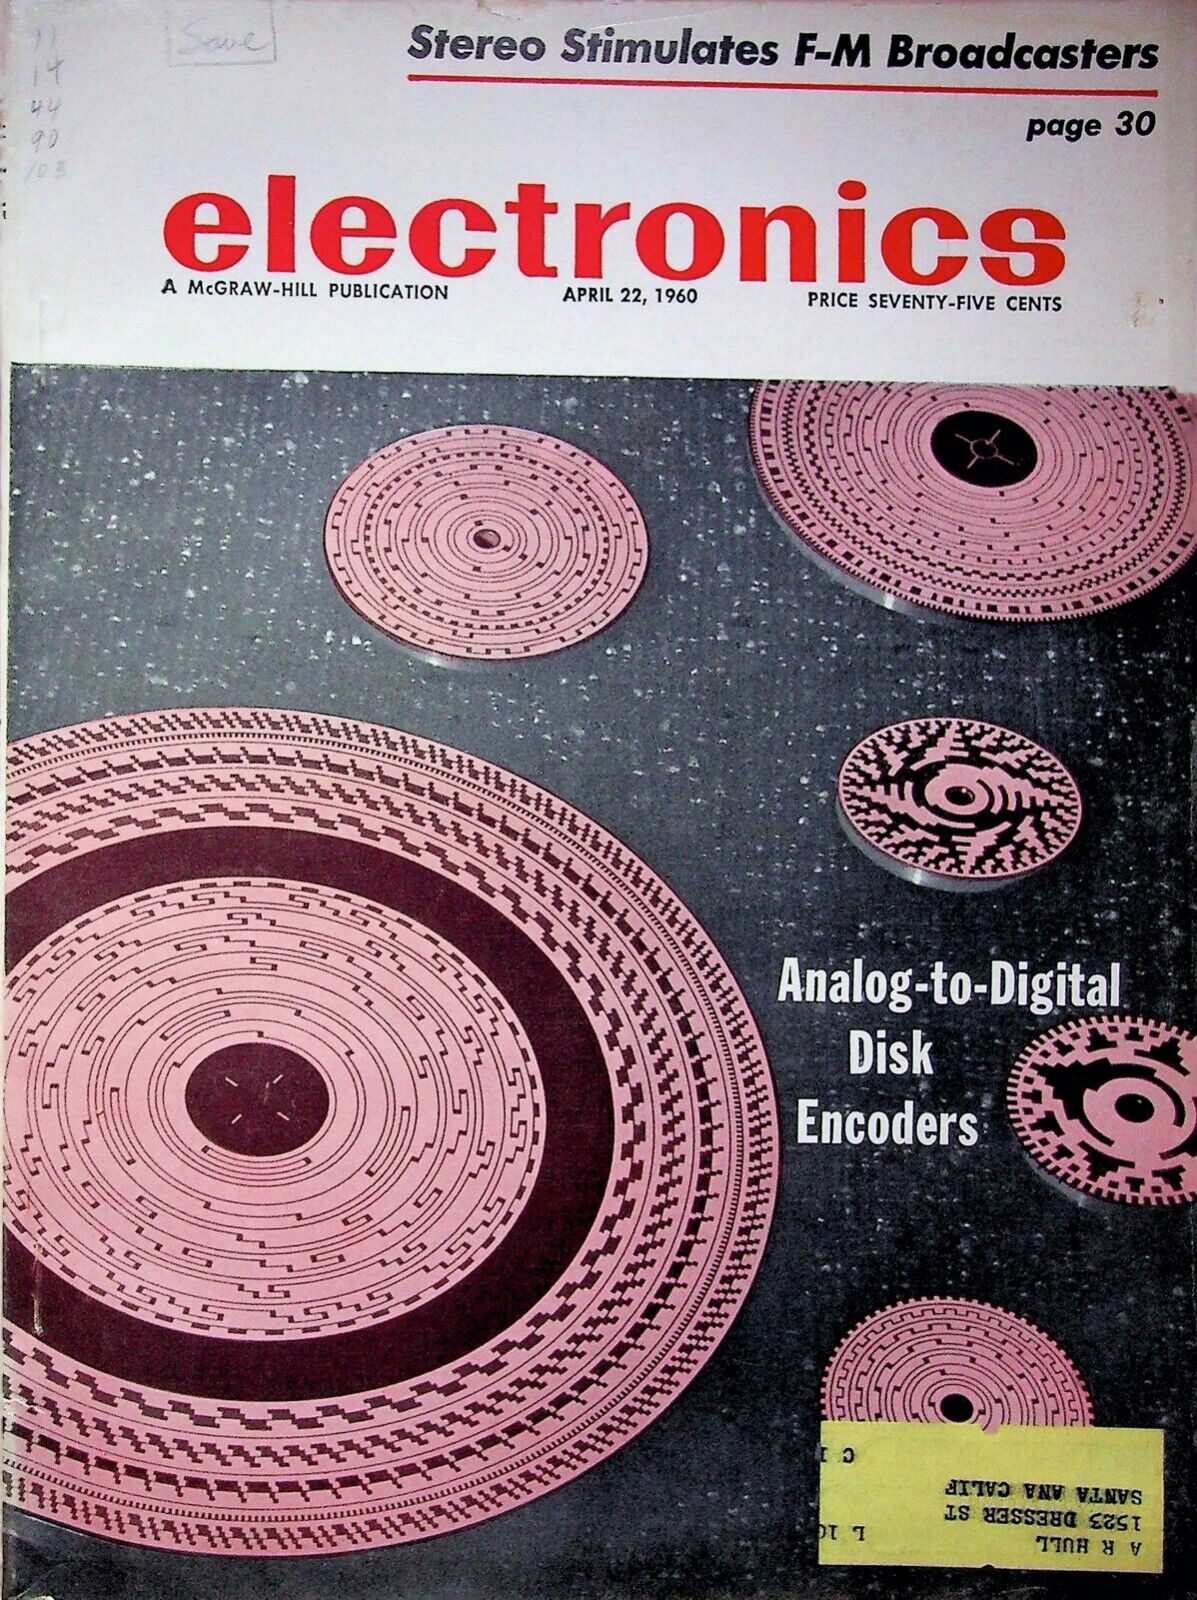 STEREO STIMULATES F-M BROADCASTERS - ELECTRONICS MAGAZINE, APRIL 22, 1960